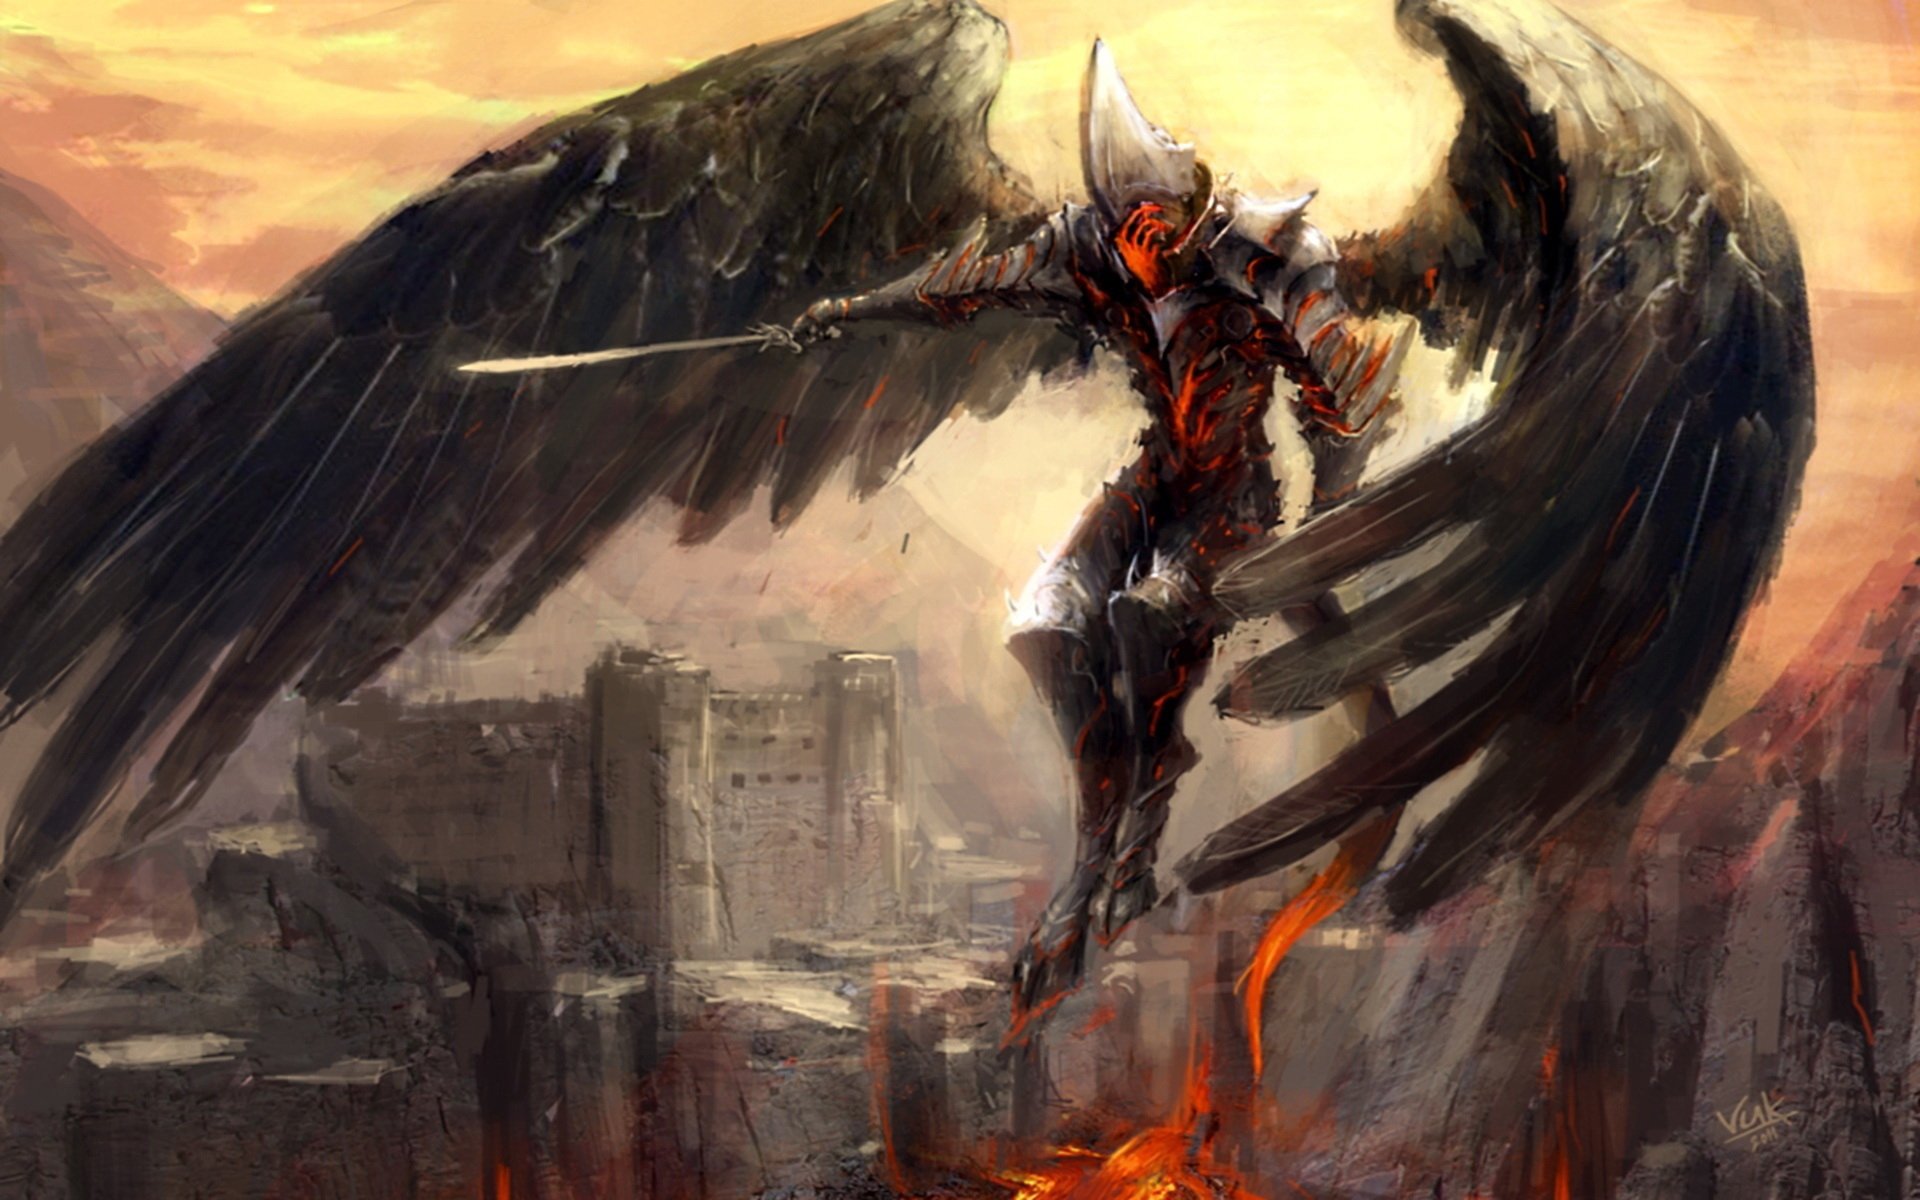 Best Angels And Demons Images On Pinterest Dark Angels 3